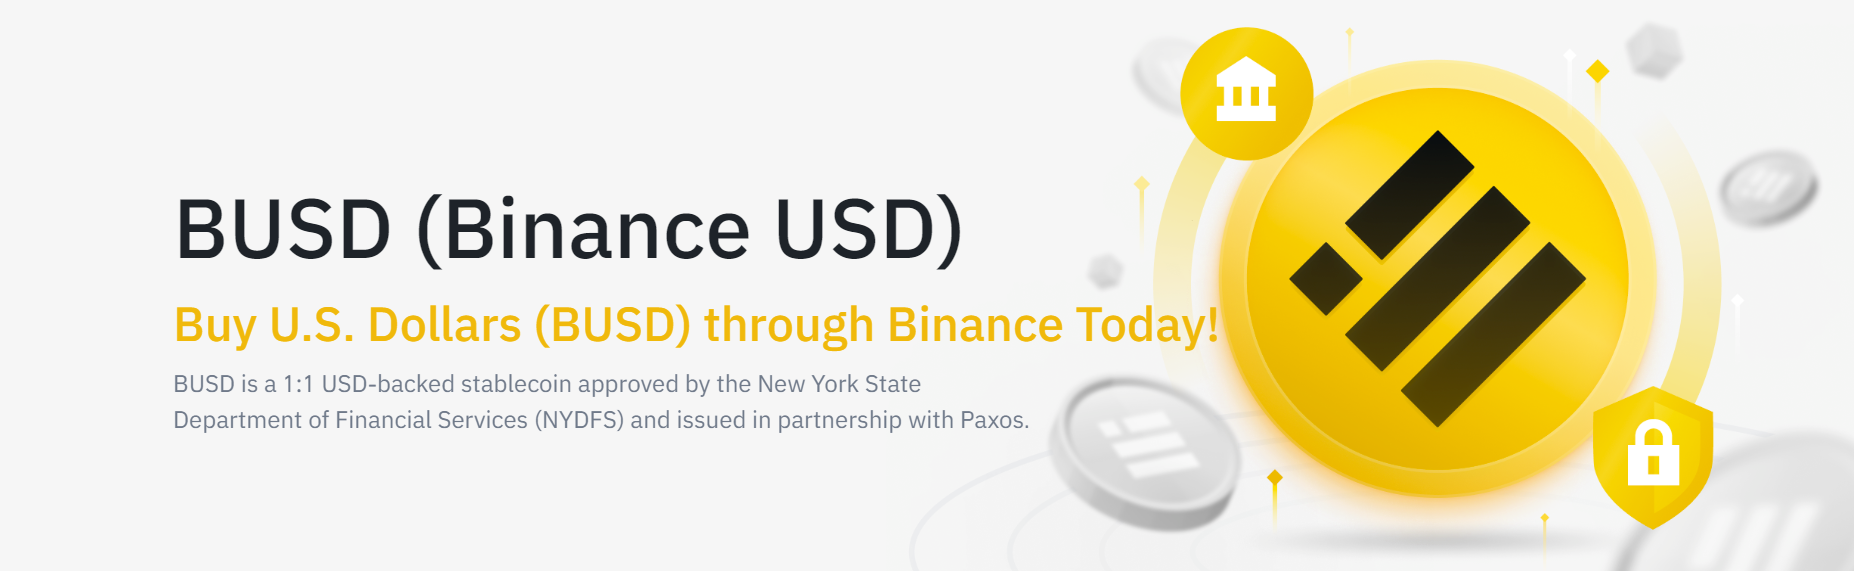 Global Cryptocurrency Adoption Transformed by Binance USD